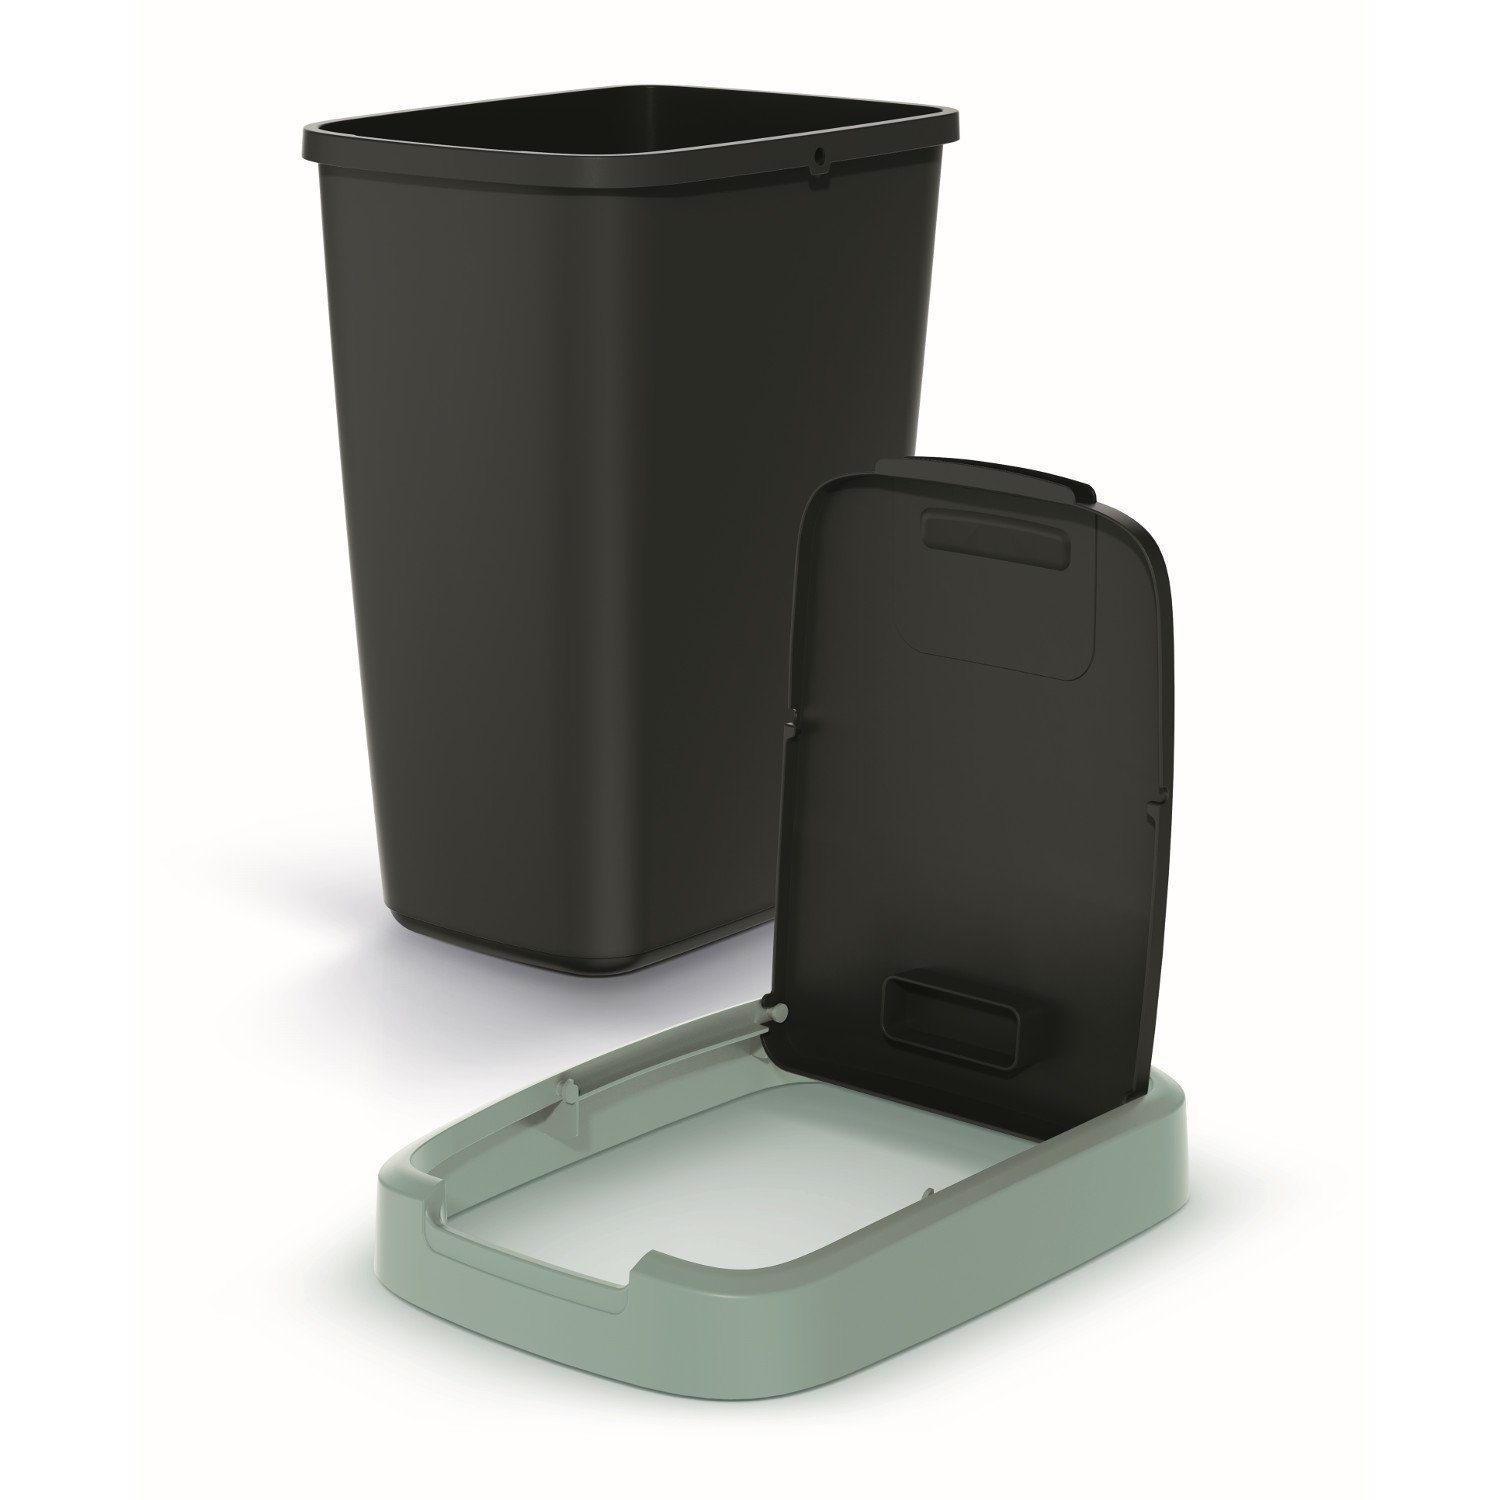 KEDEN Grün Q mit Compacta Deckel Mülleimer Keden Q, 12l Abfallbehälter COMPACTA